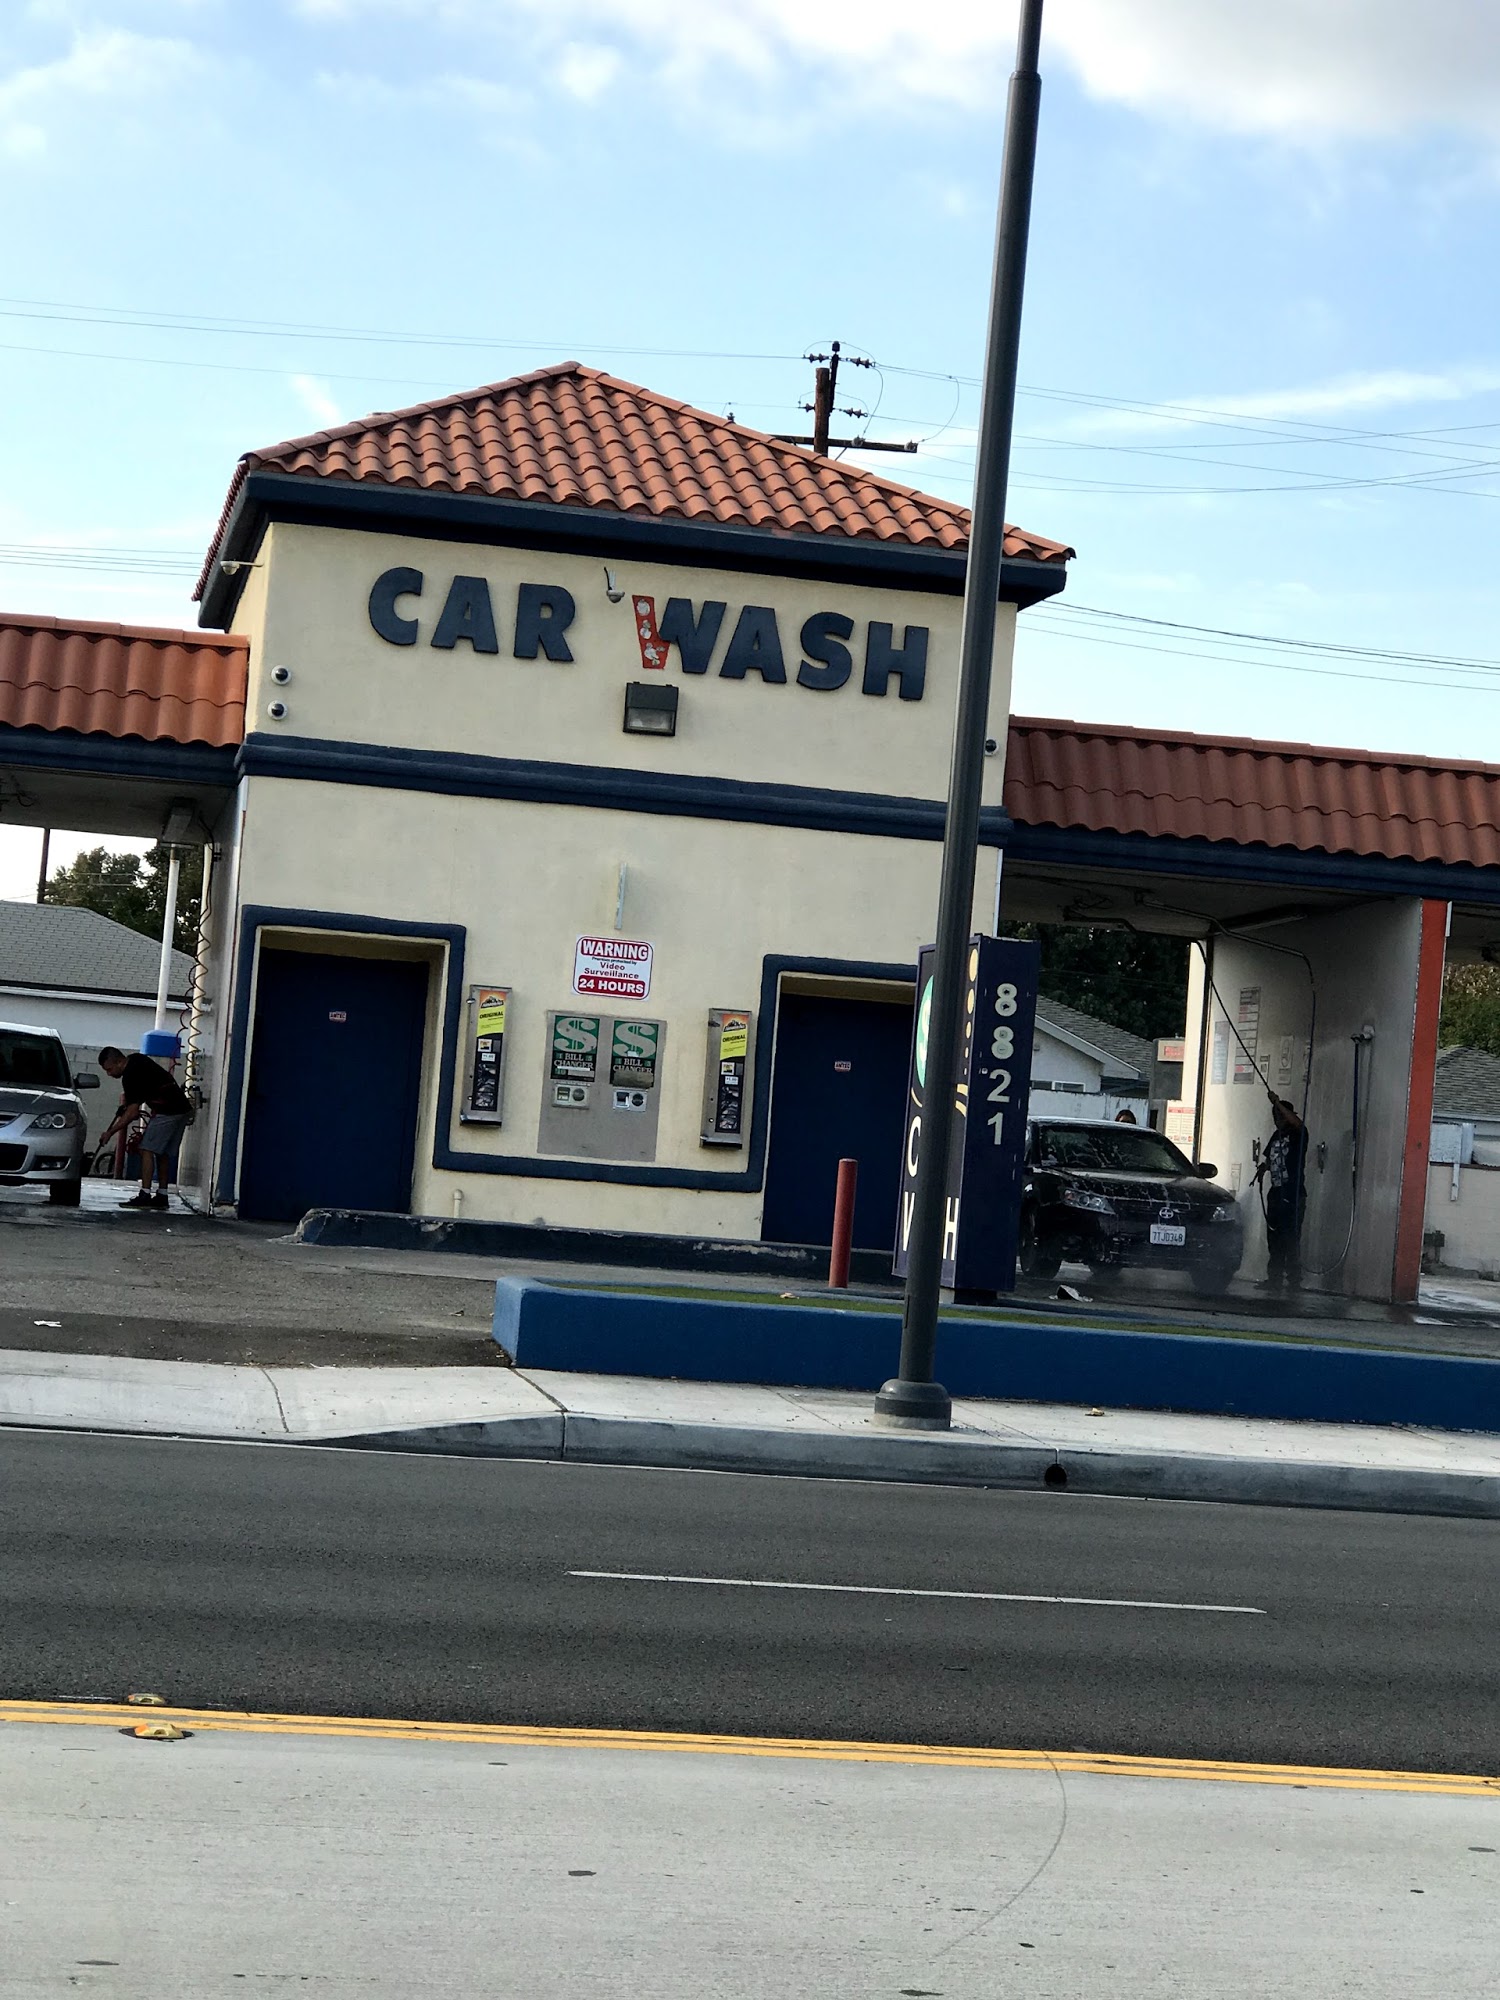 $1 Car Wash